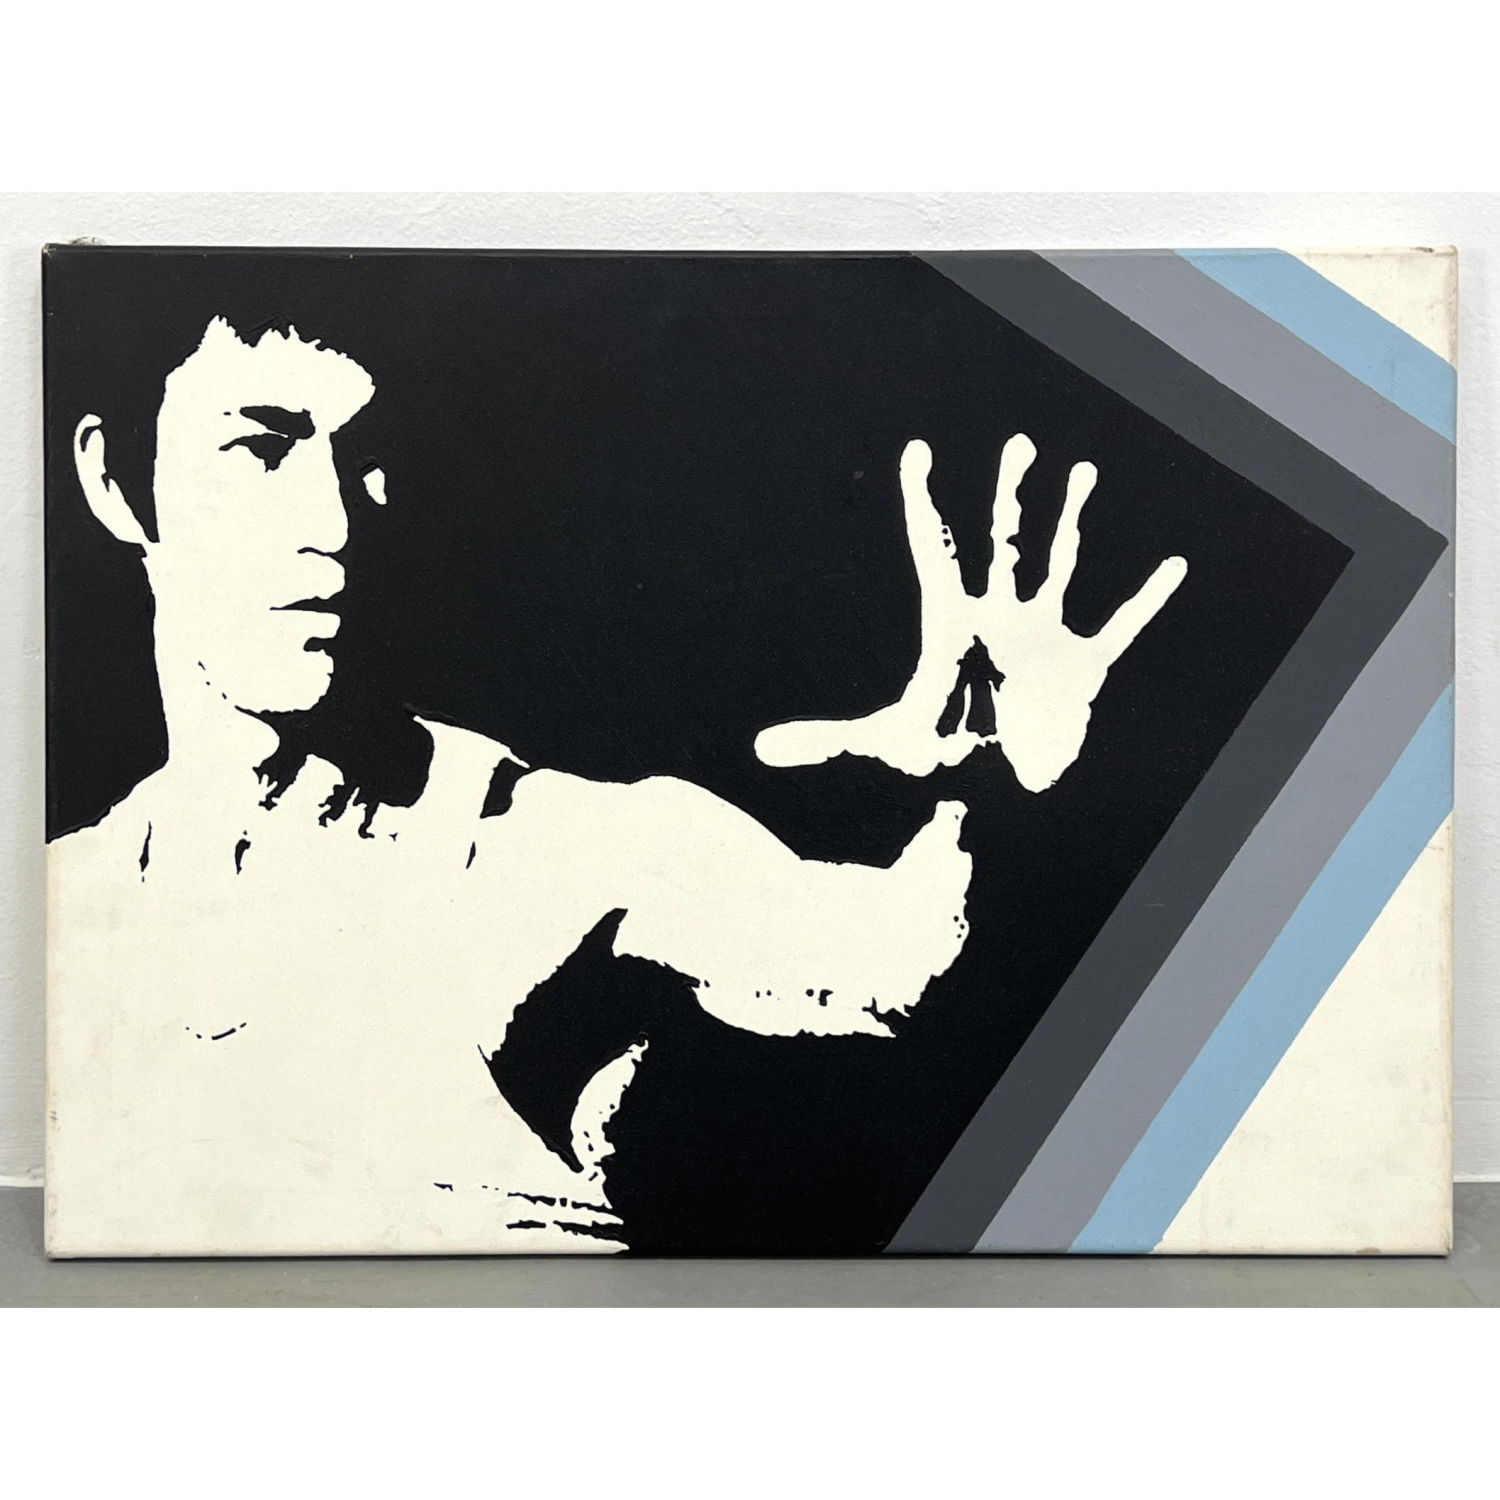 OTAKU Bruce Lee Graphic Modernist